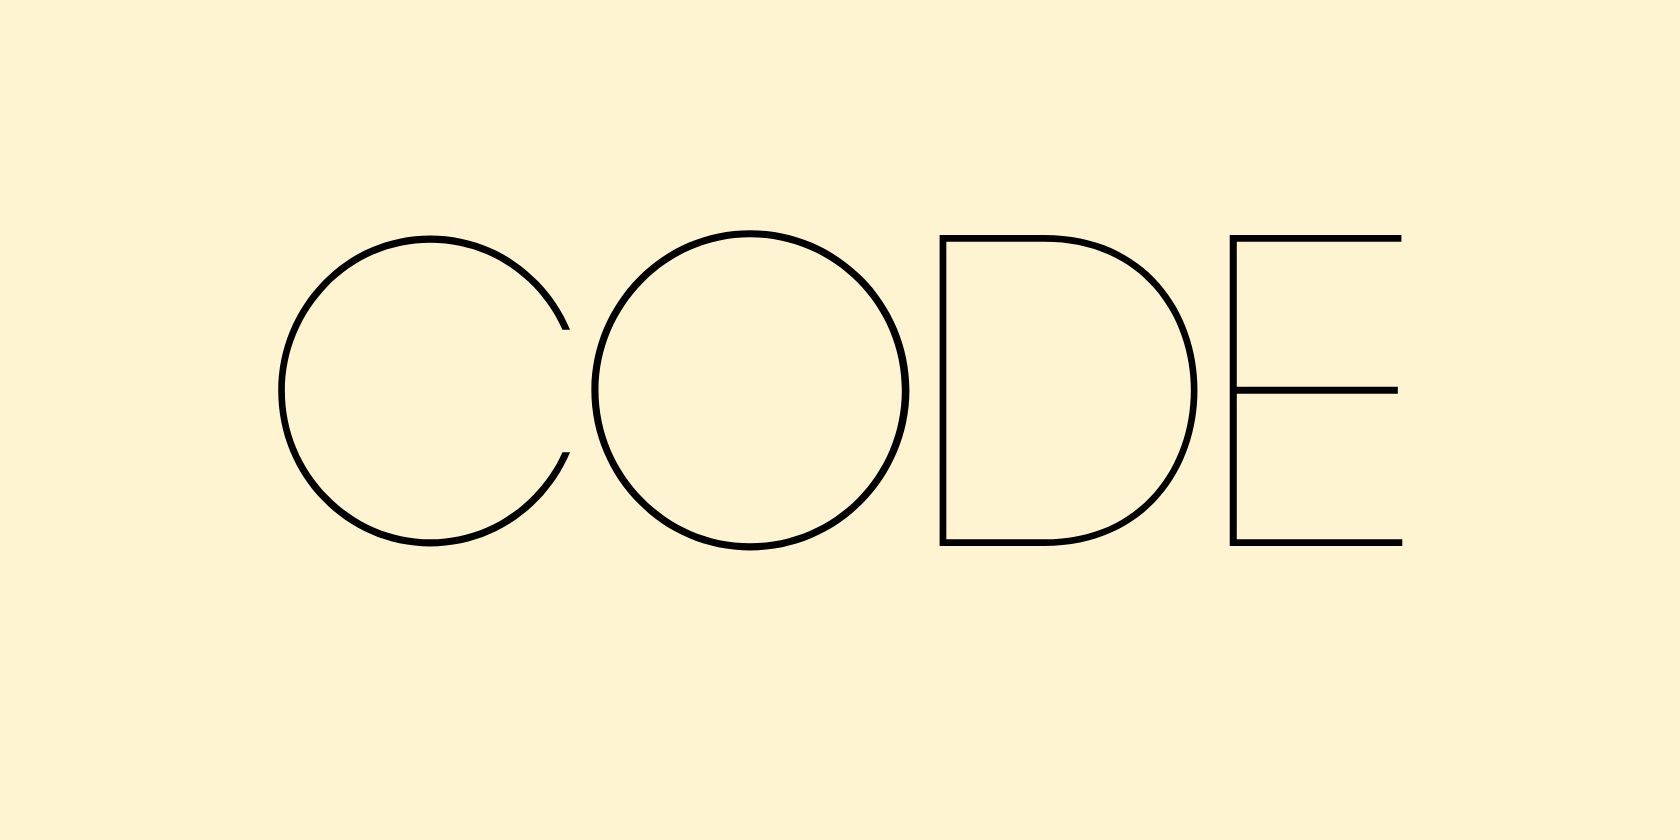  Canva font example CODE